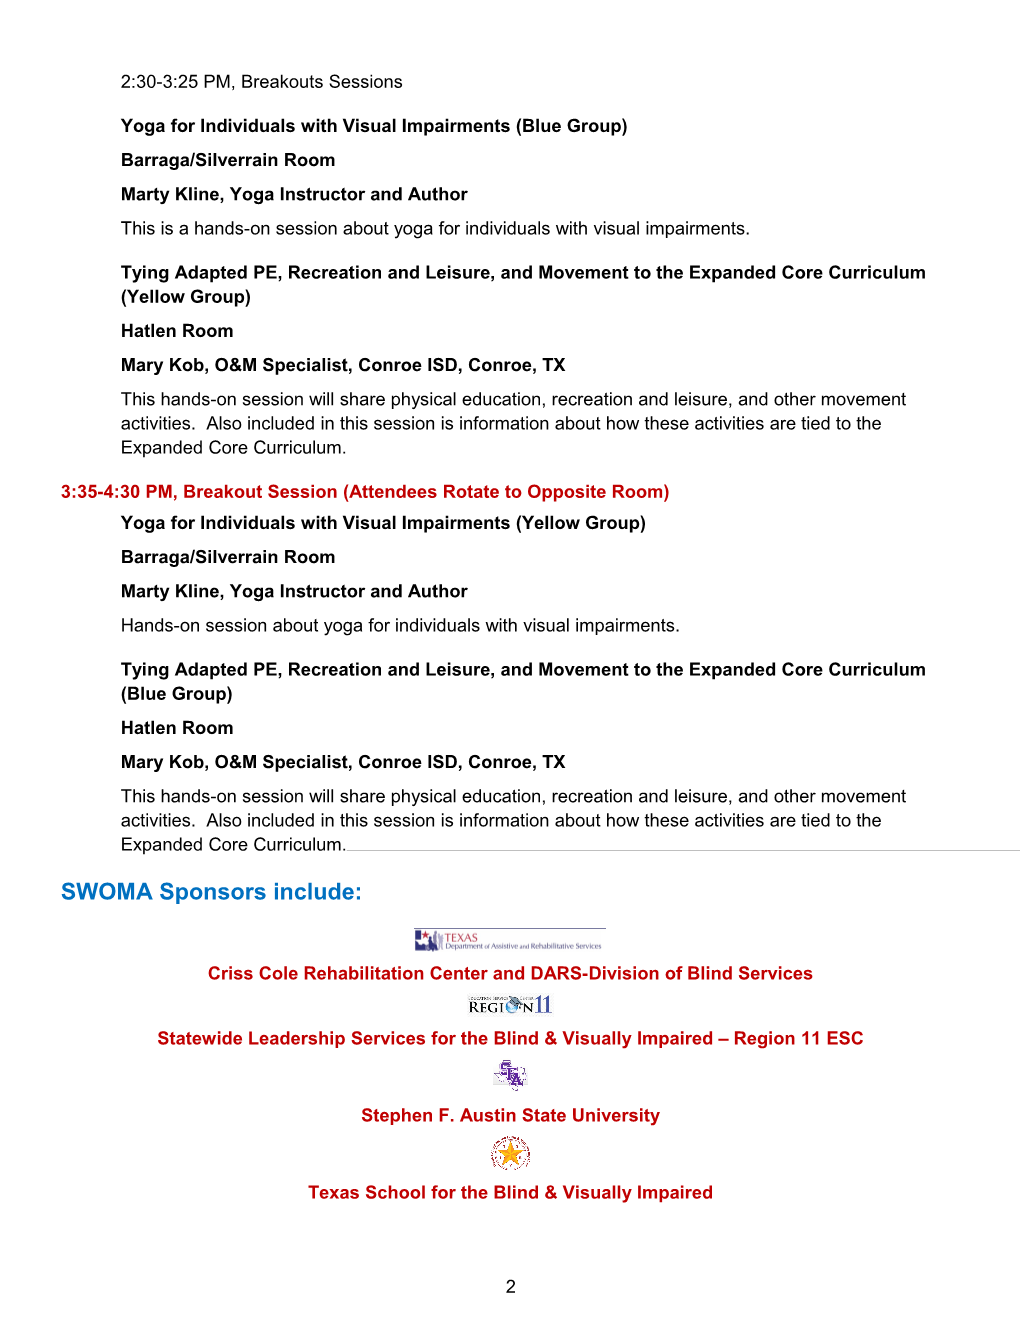 SWOMA Pre-Conference Agenda - Thursday, November 5Th